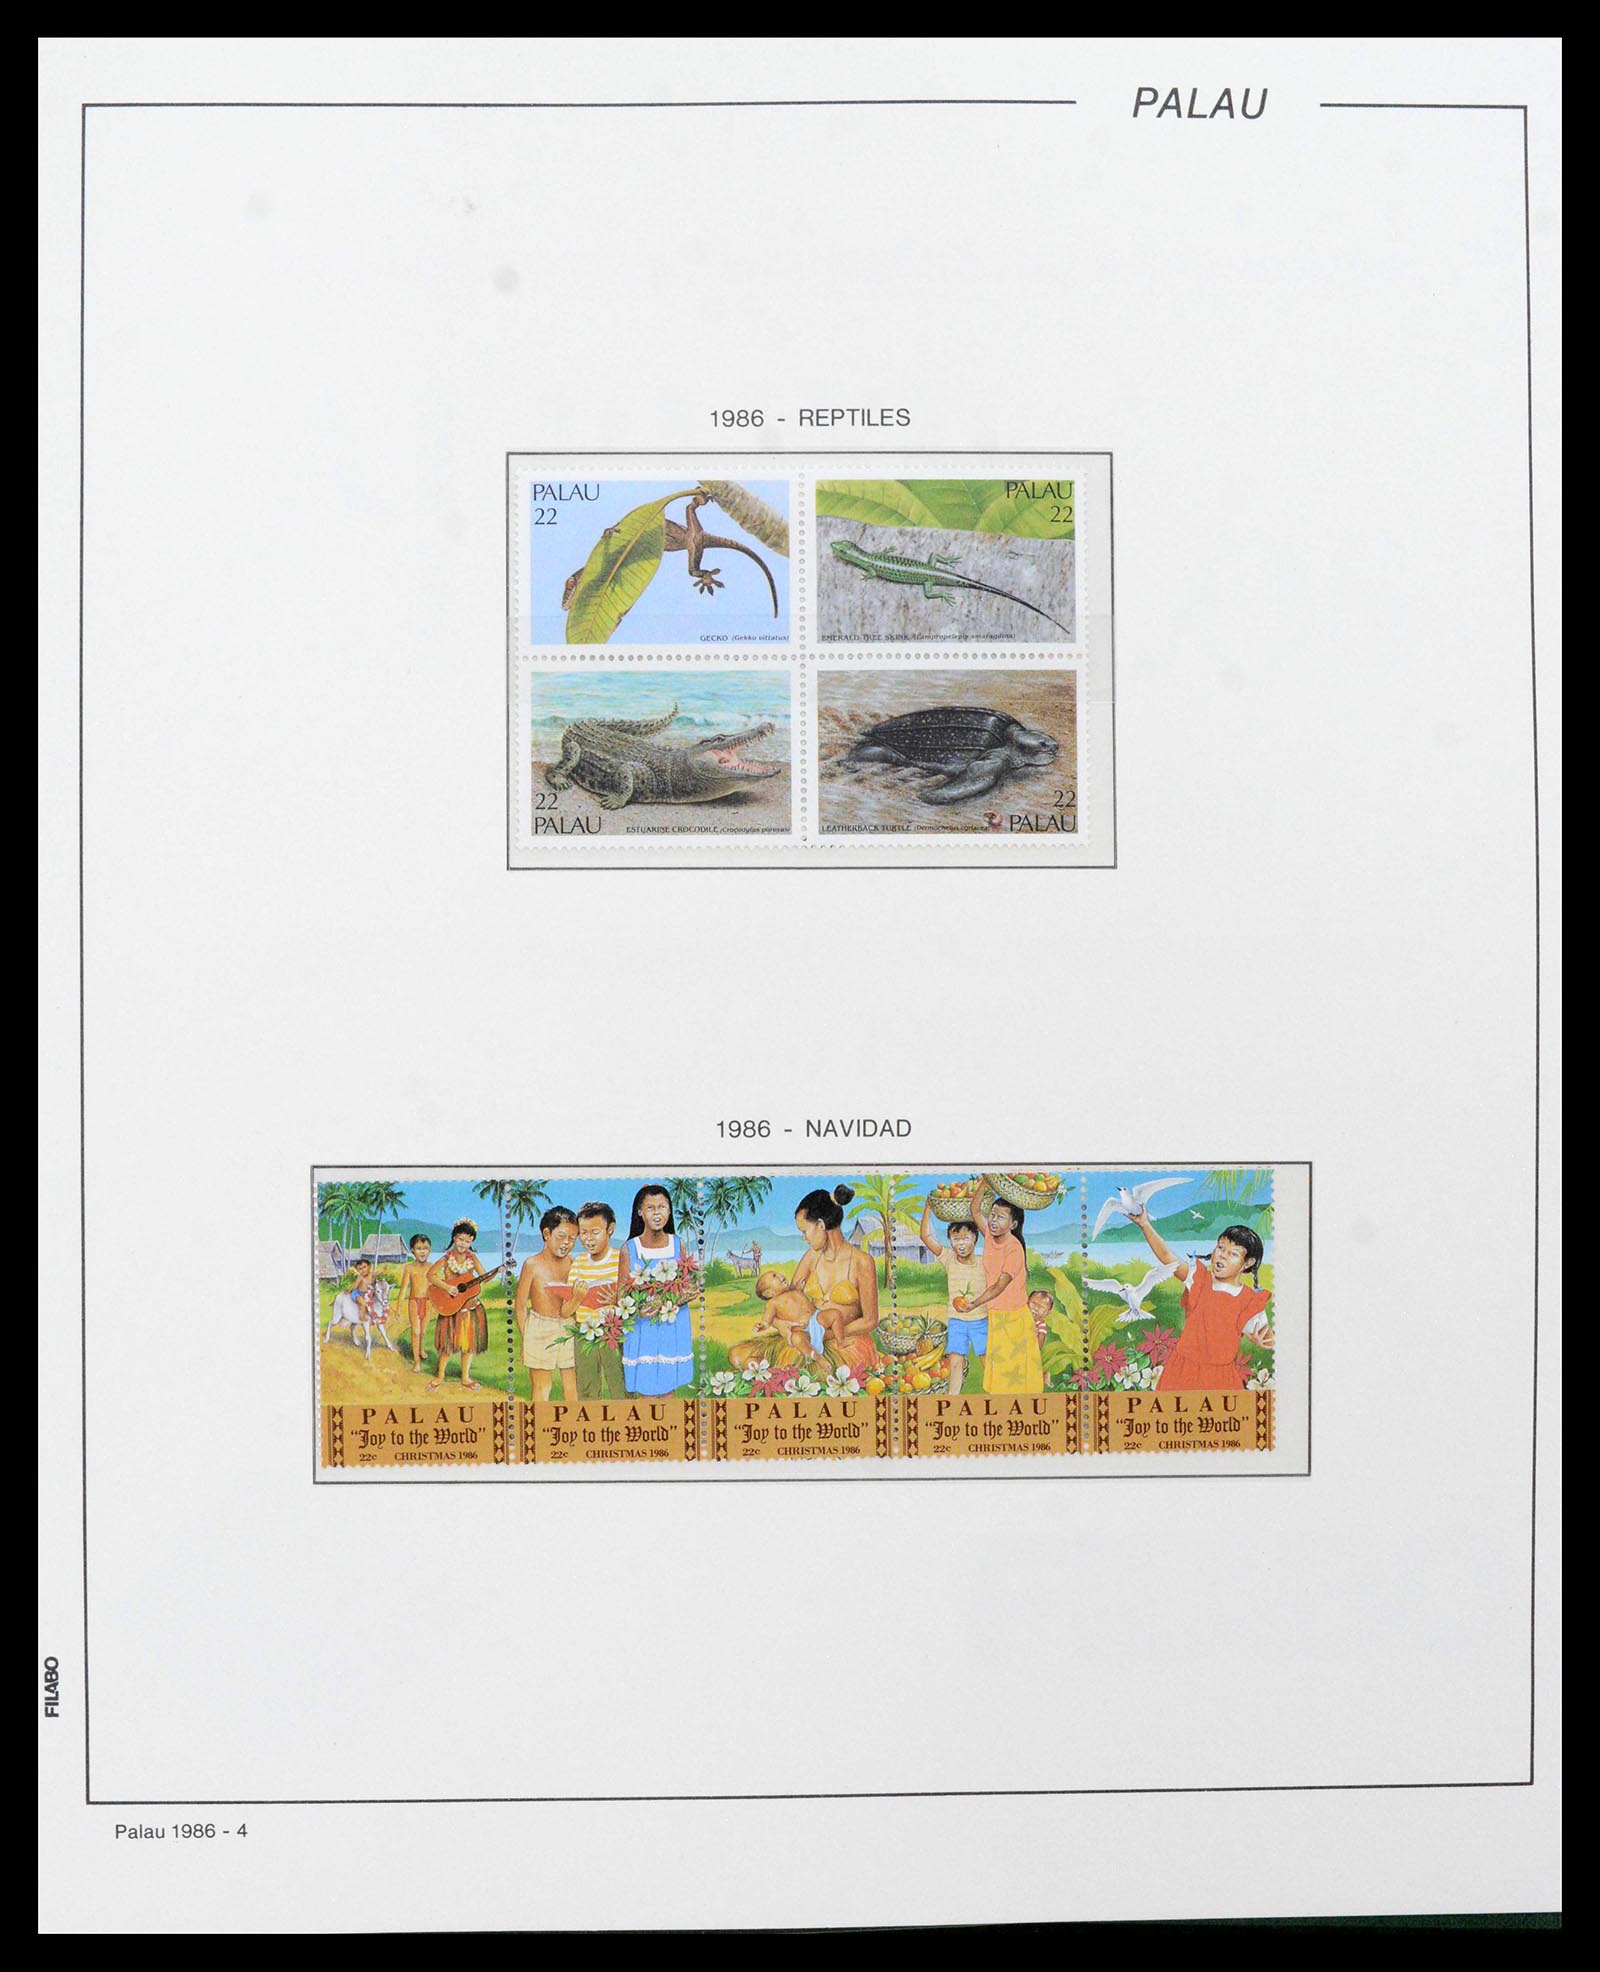 39222 0013 - Stamp collection 39222 Palau, Micronesia and Marshall islands 1980-1995.